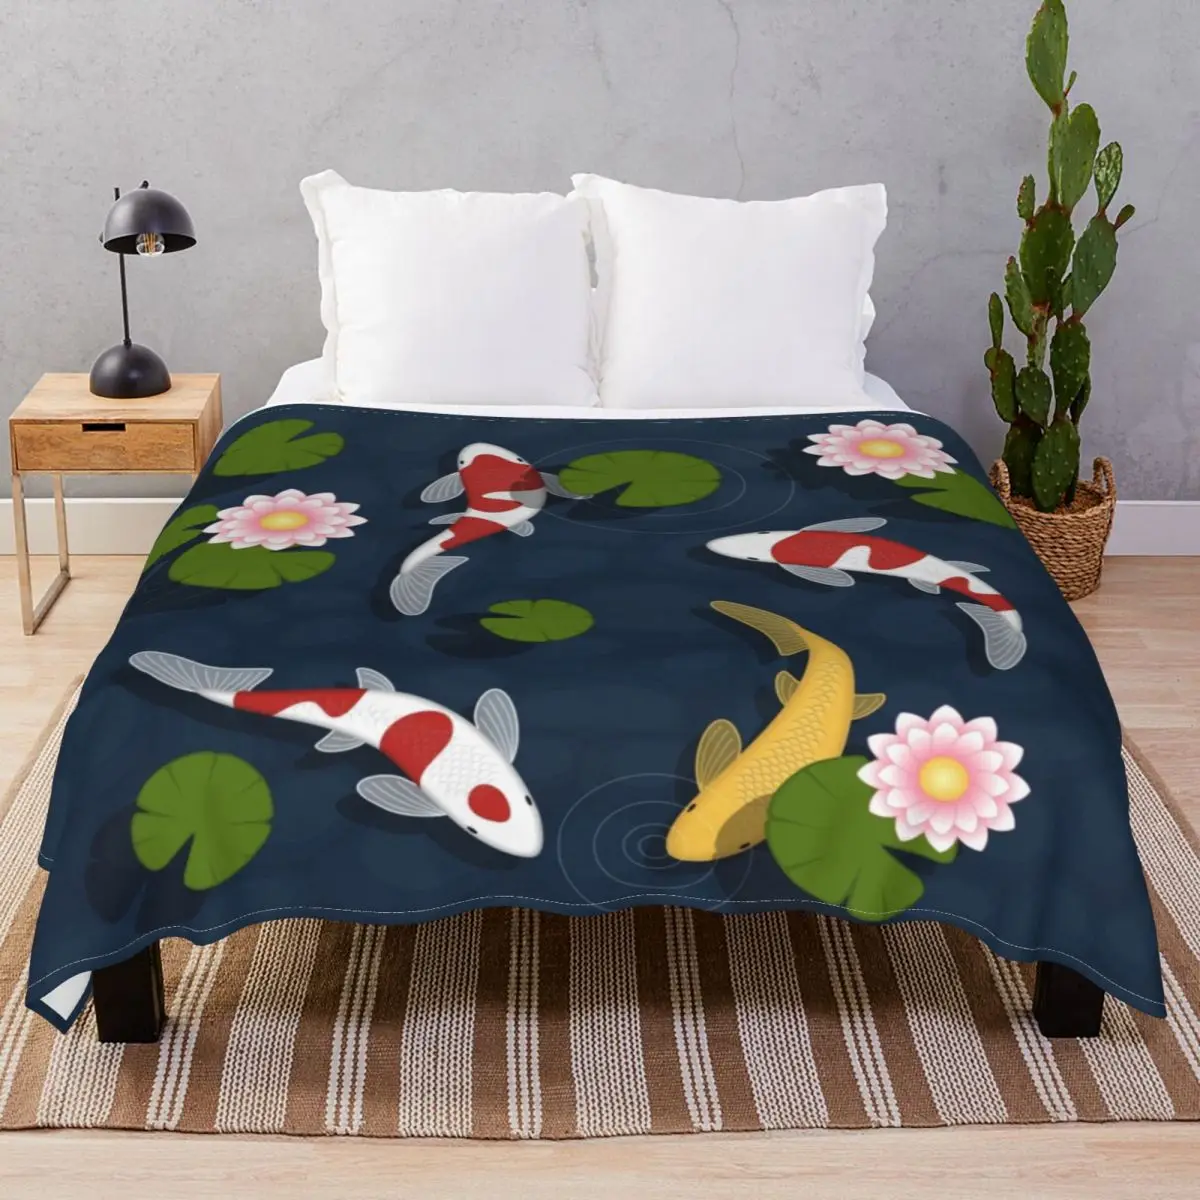 Japanese Koi Fish Pond Blankets Fleece Autumn Super Warm Throw Blanket for Bedding Home Couch Camp Cinema